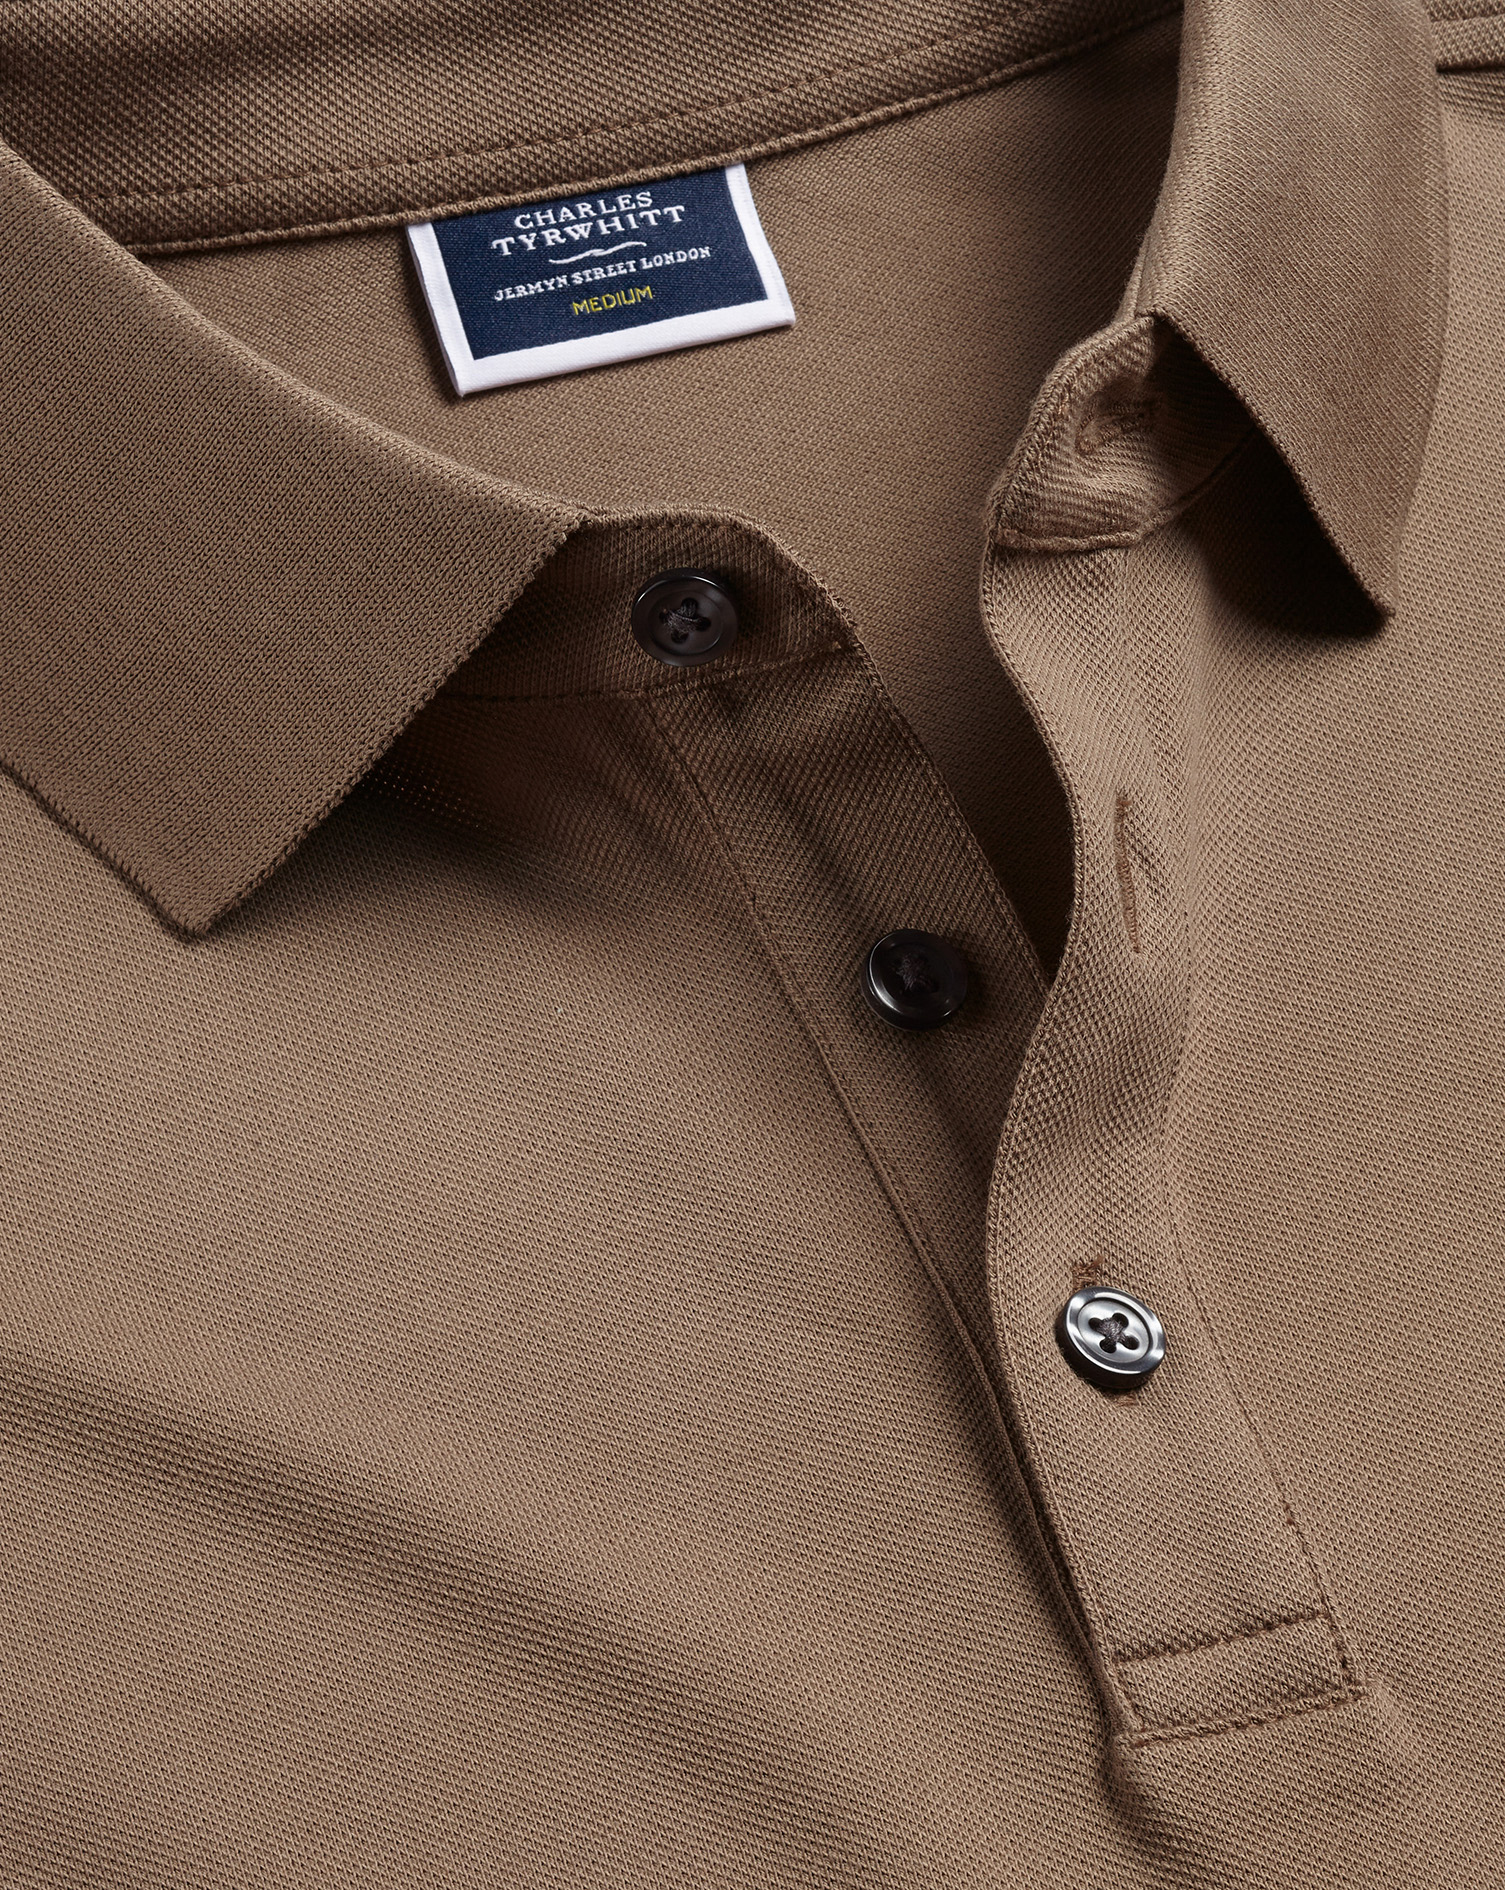 Men's Charles Tyrwhitt Long Sleeve Pique Polo Shirt - Navy Blue Size Small Cotton